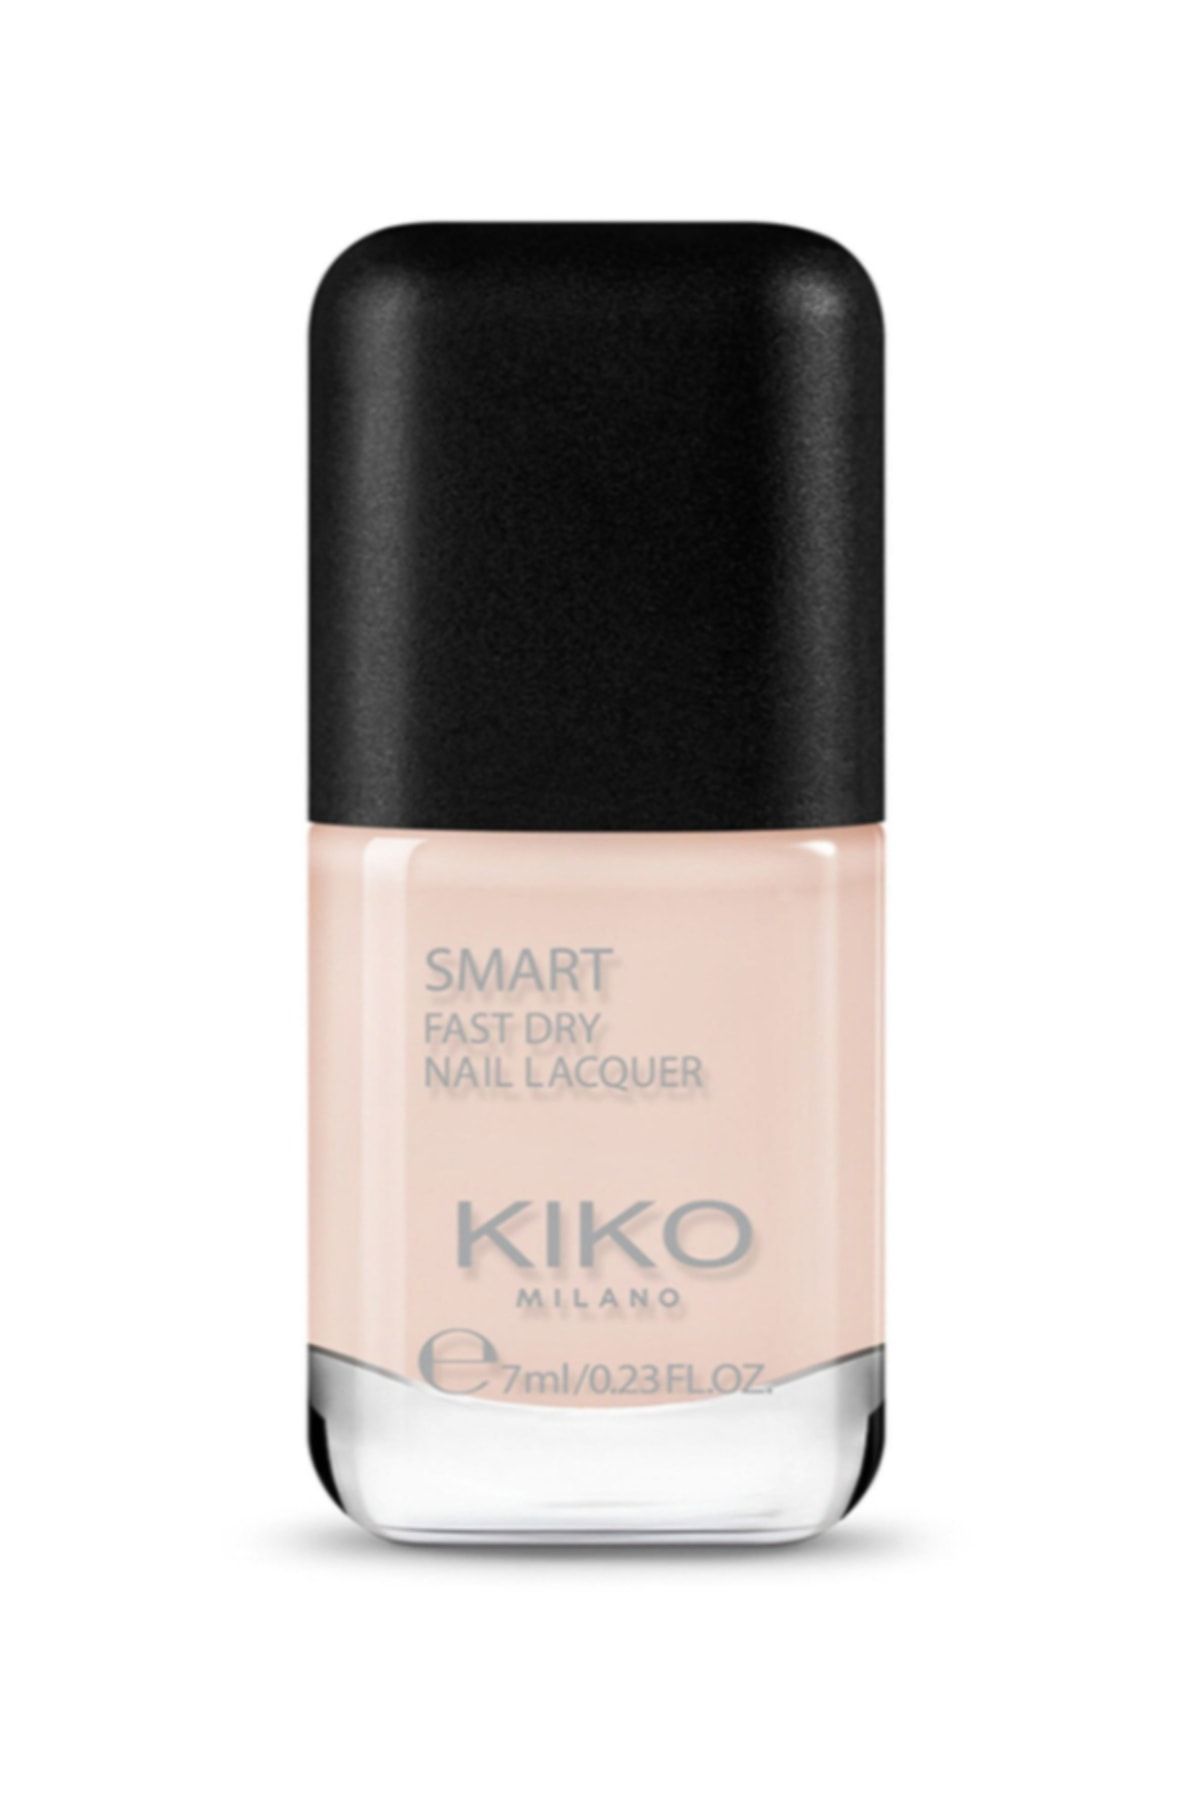 KIKO Smart Fast Dry Nail Lacquer 02 Oje Satin Light Beige